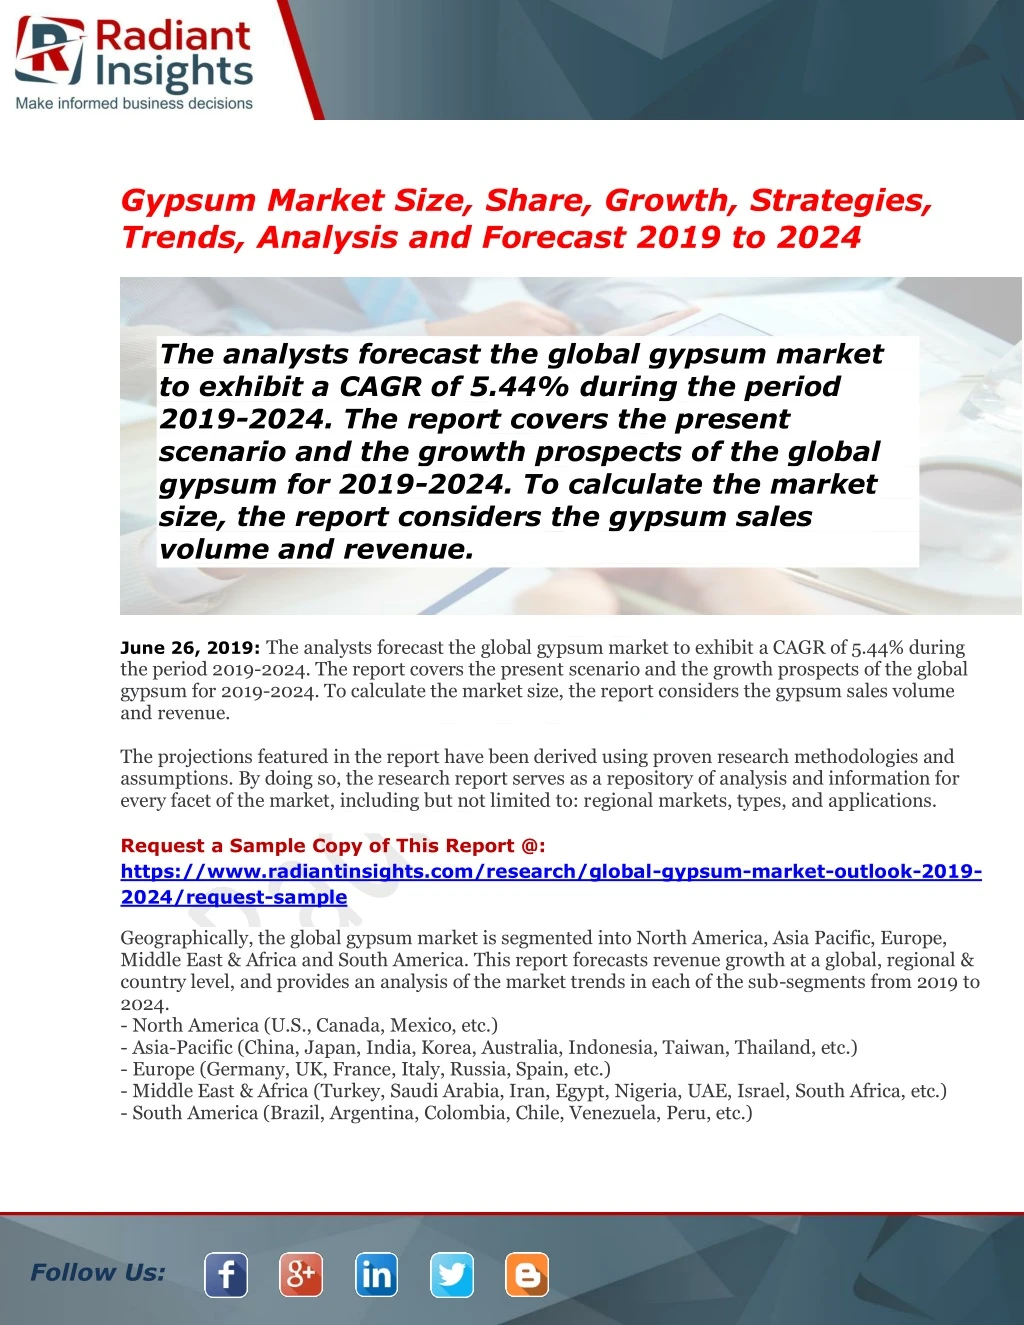 gypsum market size share growth strategies trends